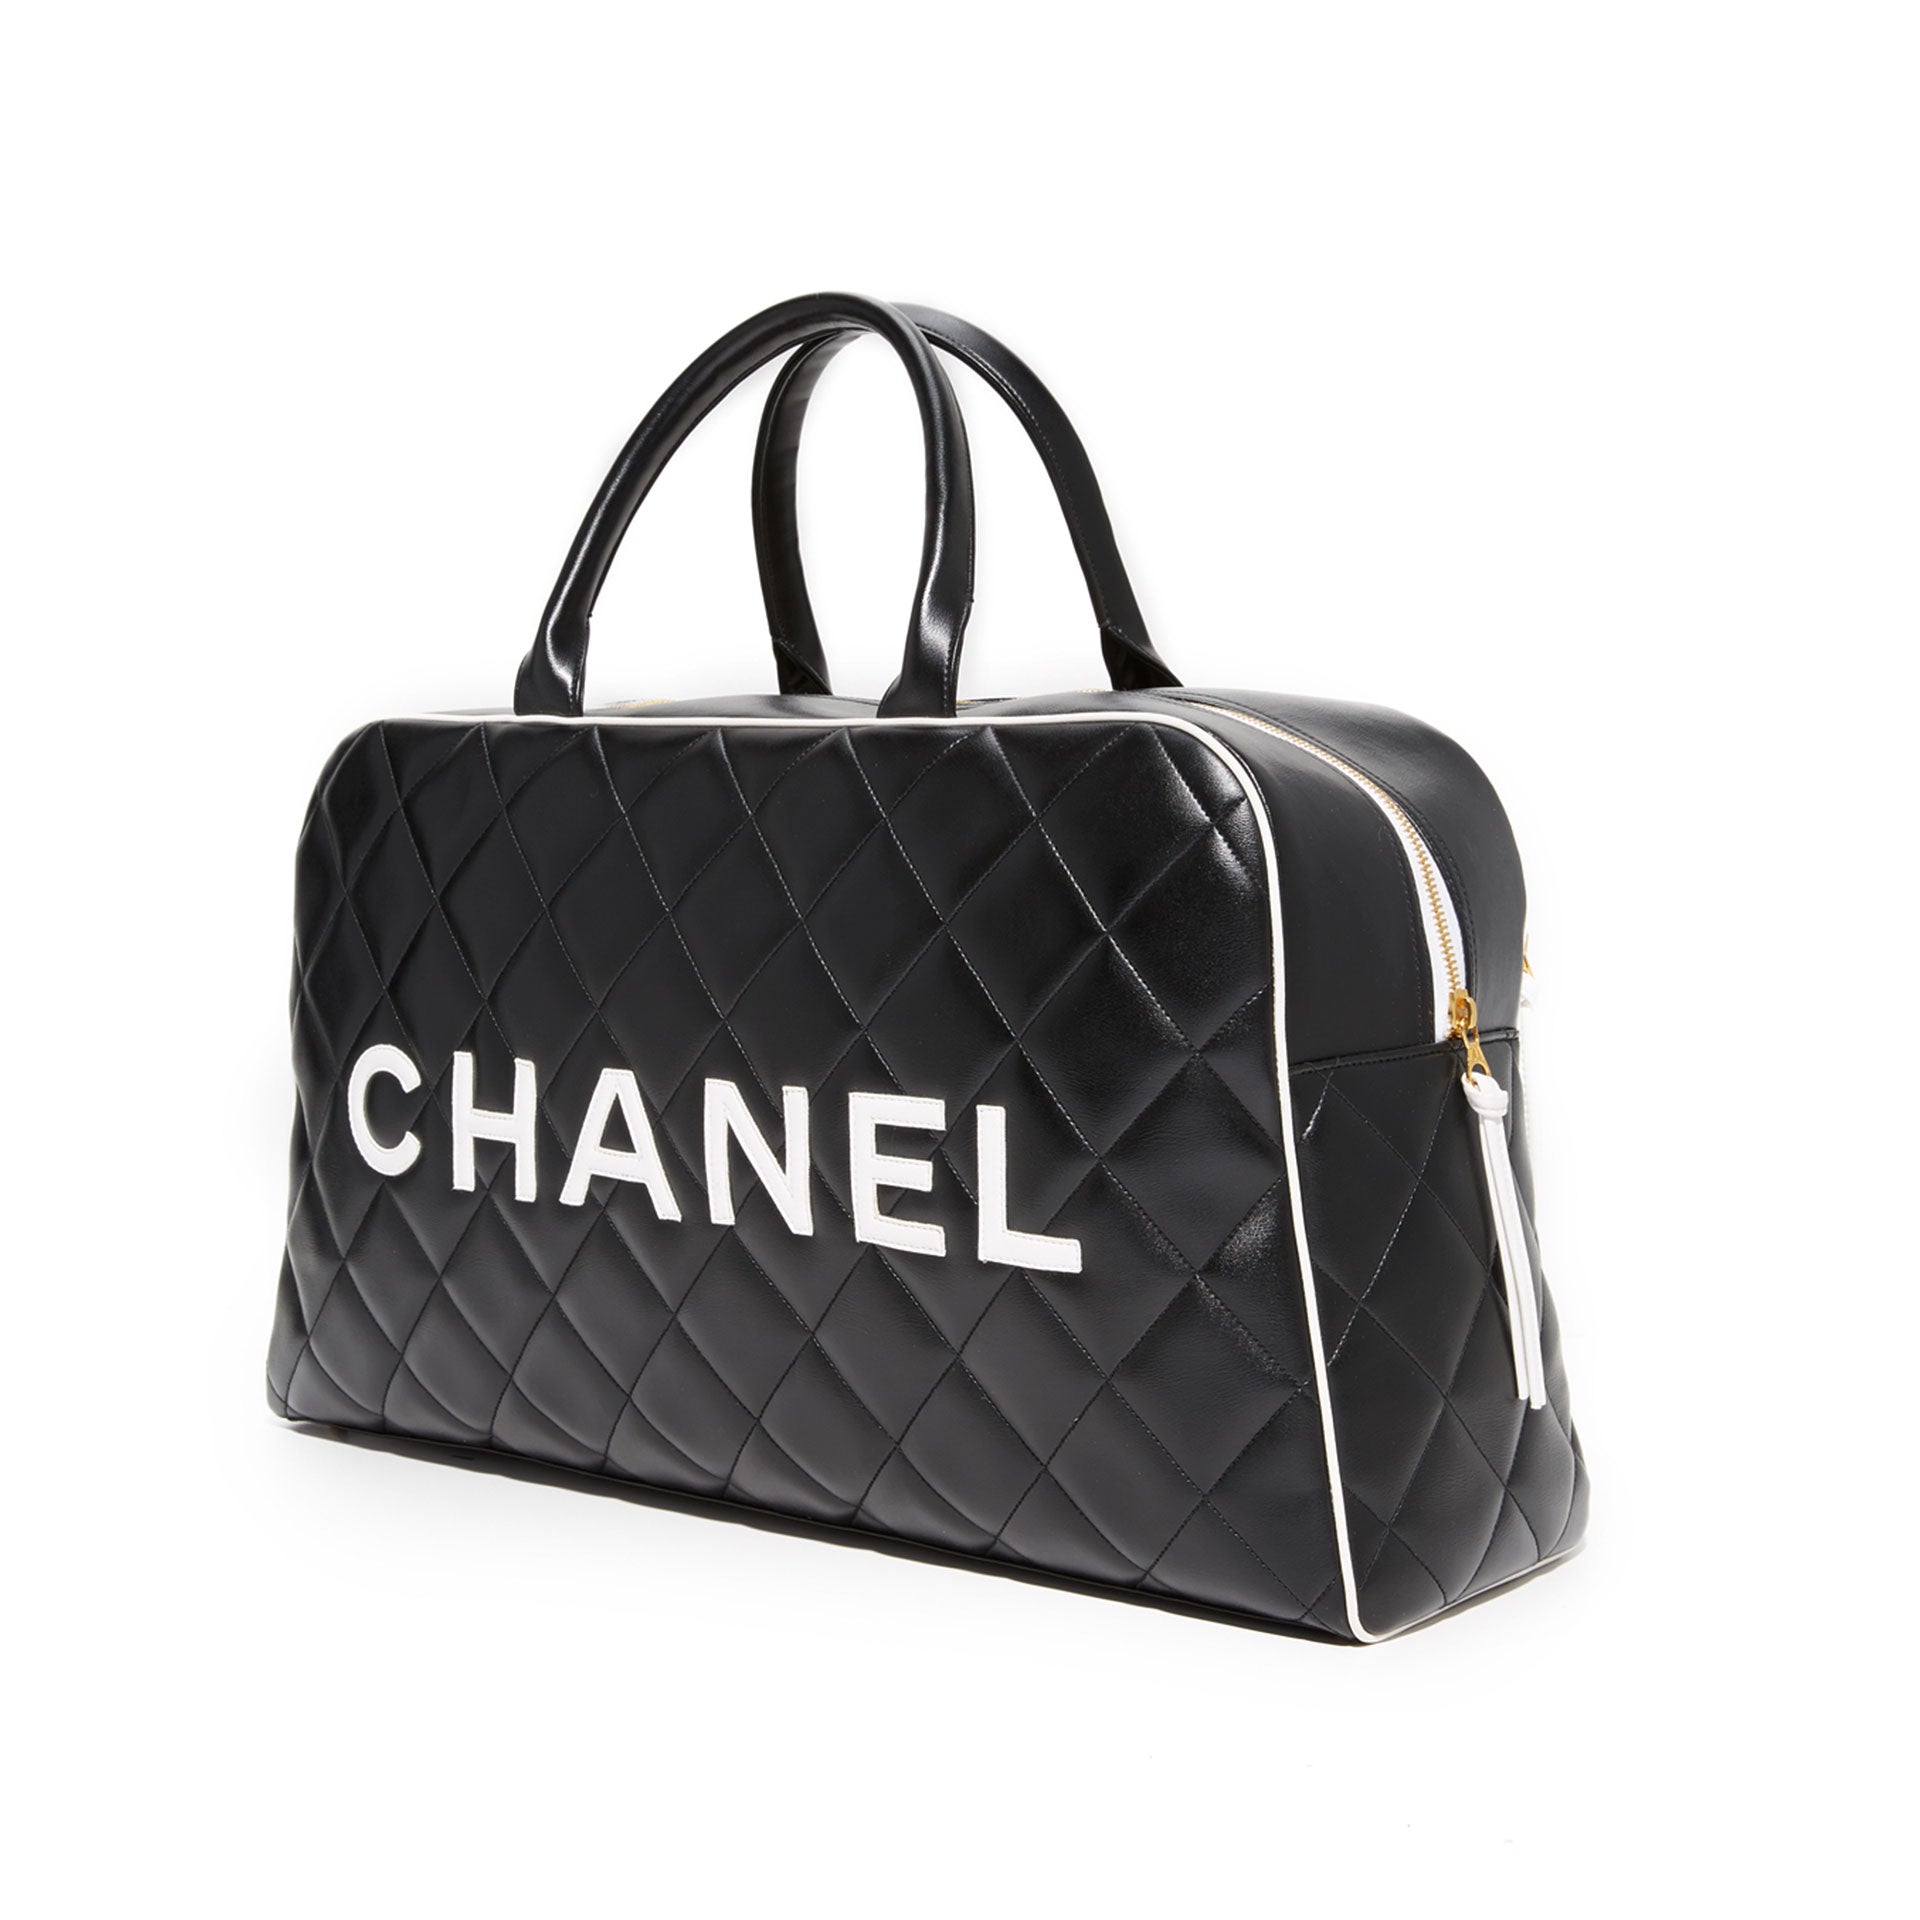 Chanel Duffle Extra Large Cc Logo Holdall 1ca516 Black Nylon Weekend/Travel  Bag, Chanel